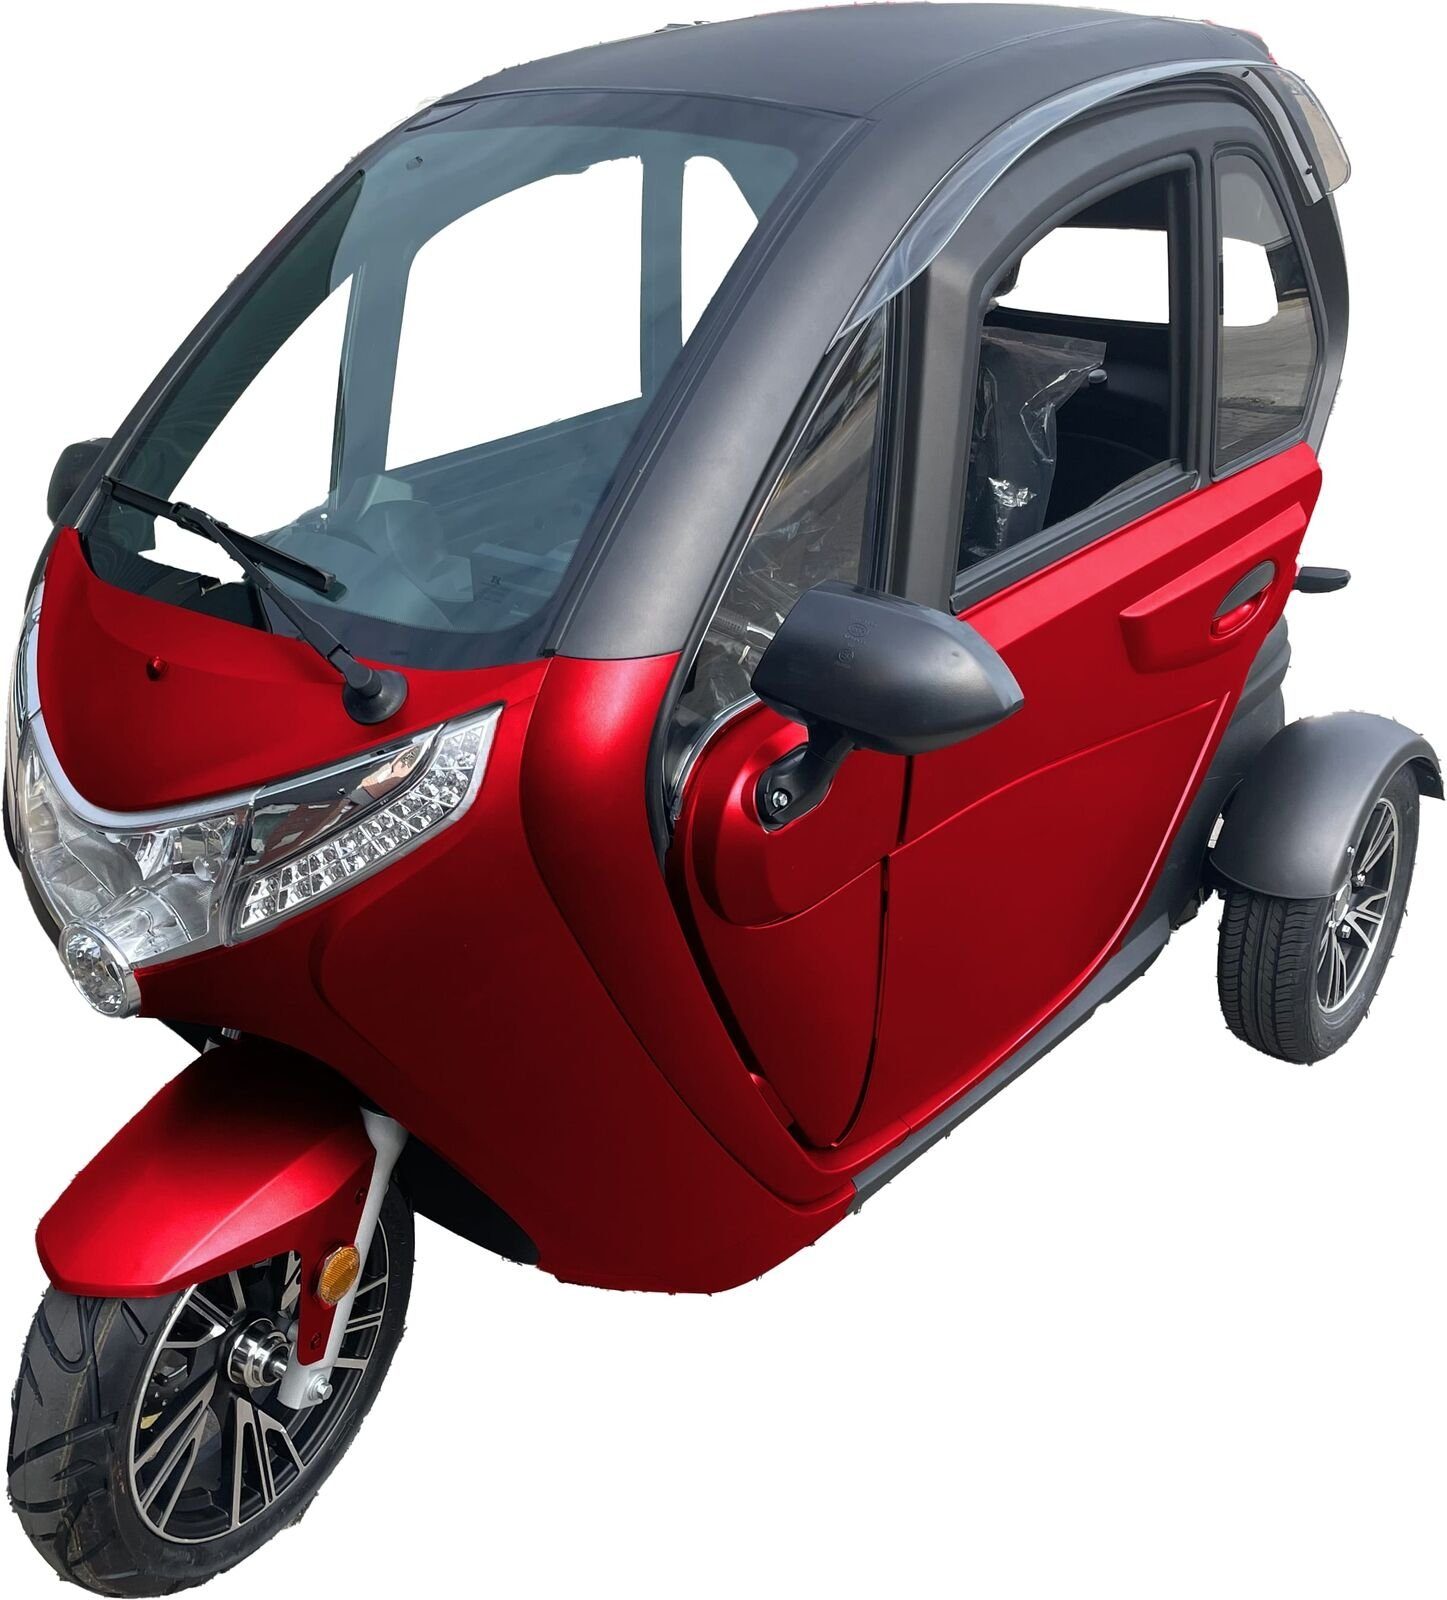 W, Rot Teico 2-Sitz, 1000,00 25,00 Kabinenroller Elektroscooter km/h Seniorenmobil 3-Rad Elektromobil